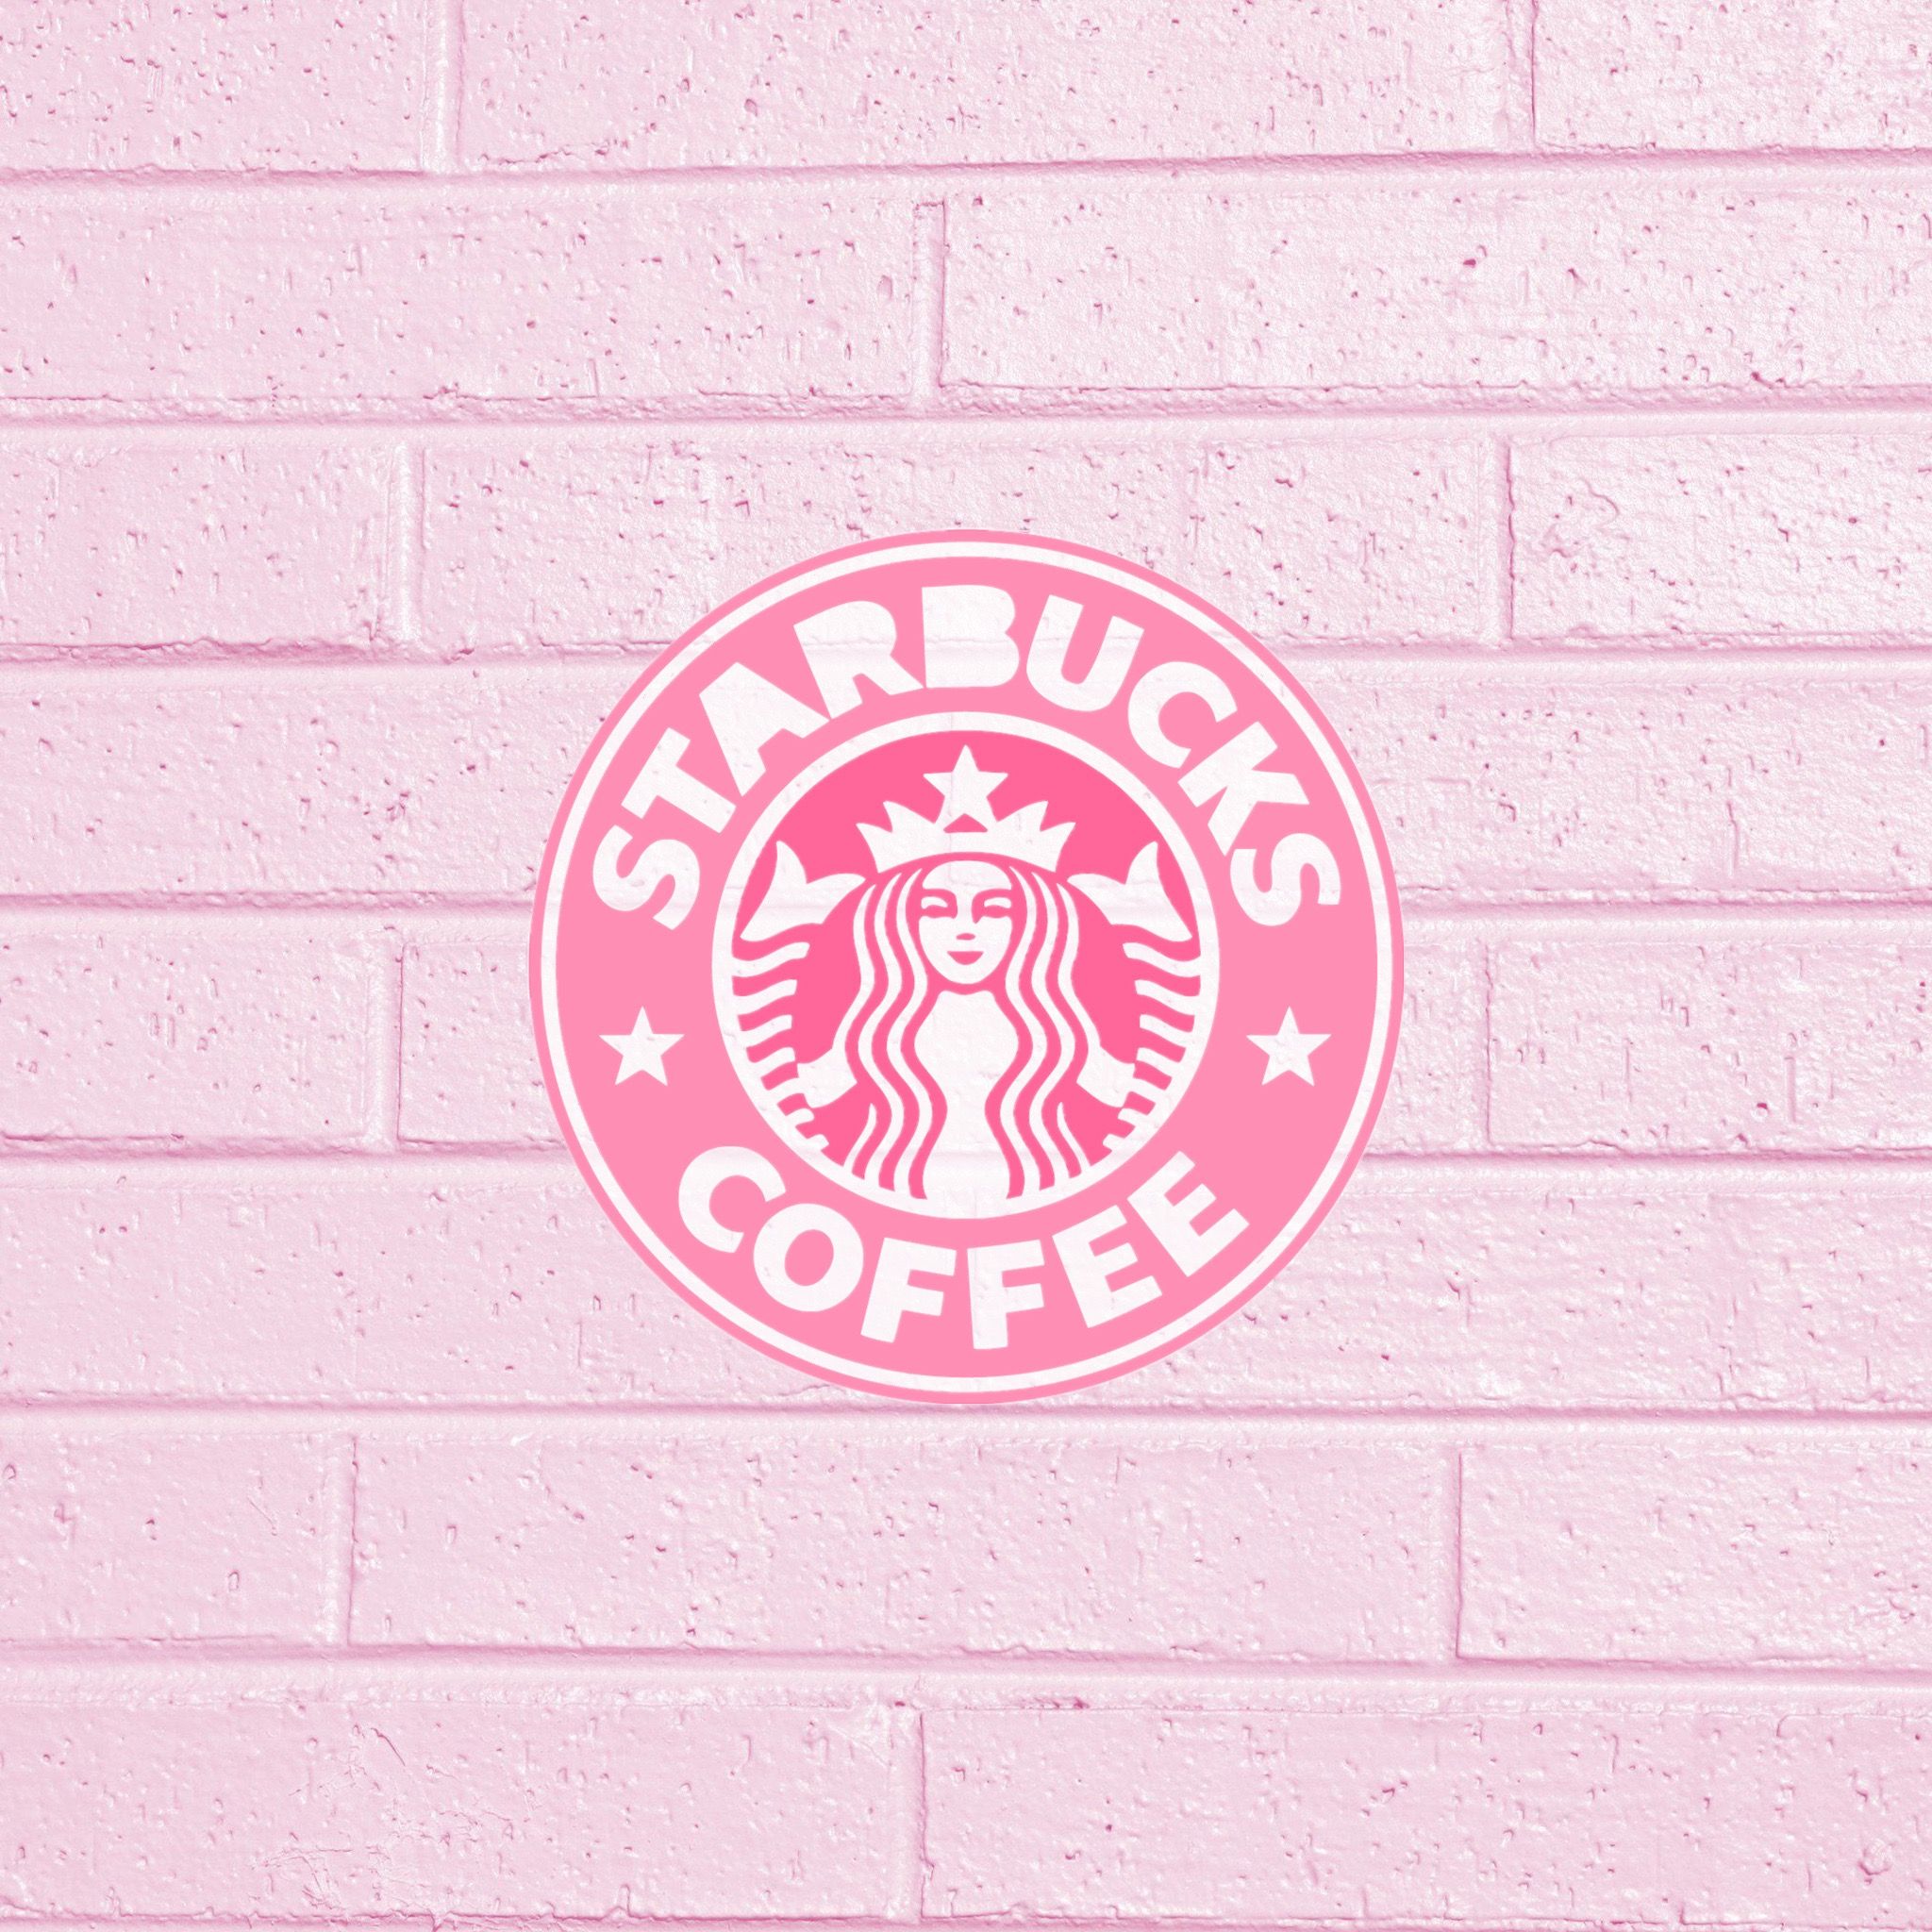 Starbucks Wallpaper. HD